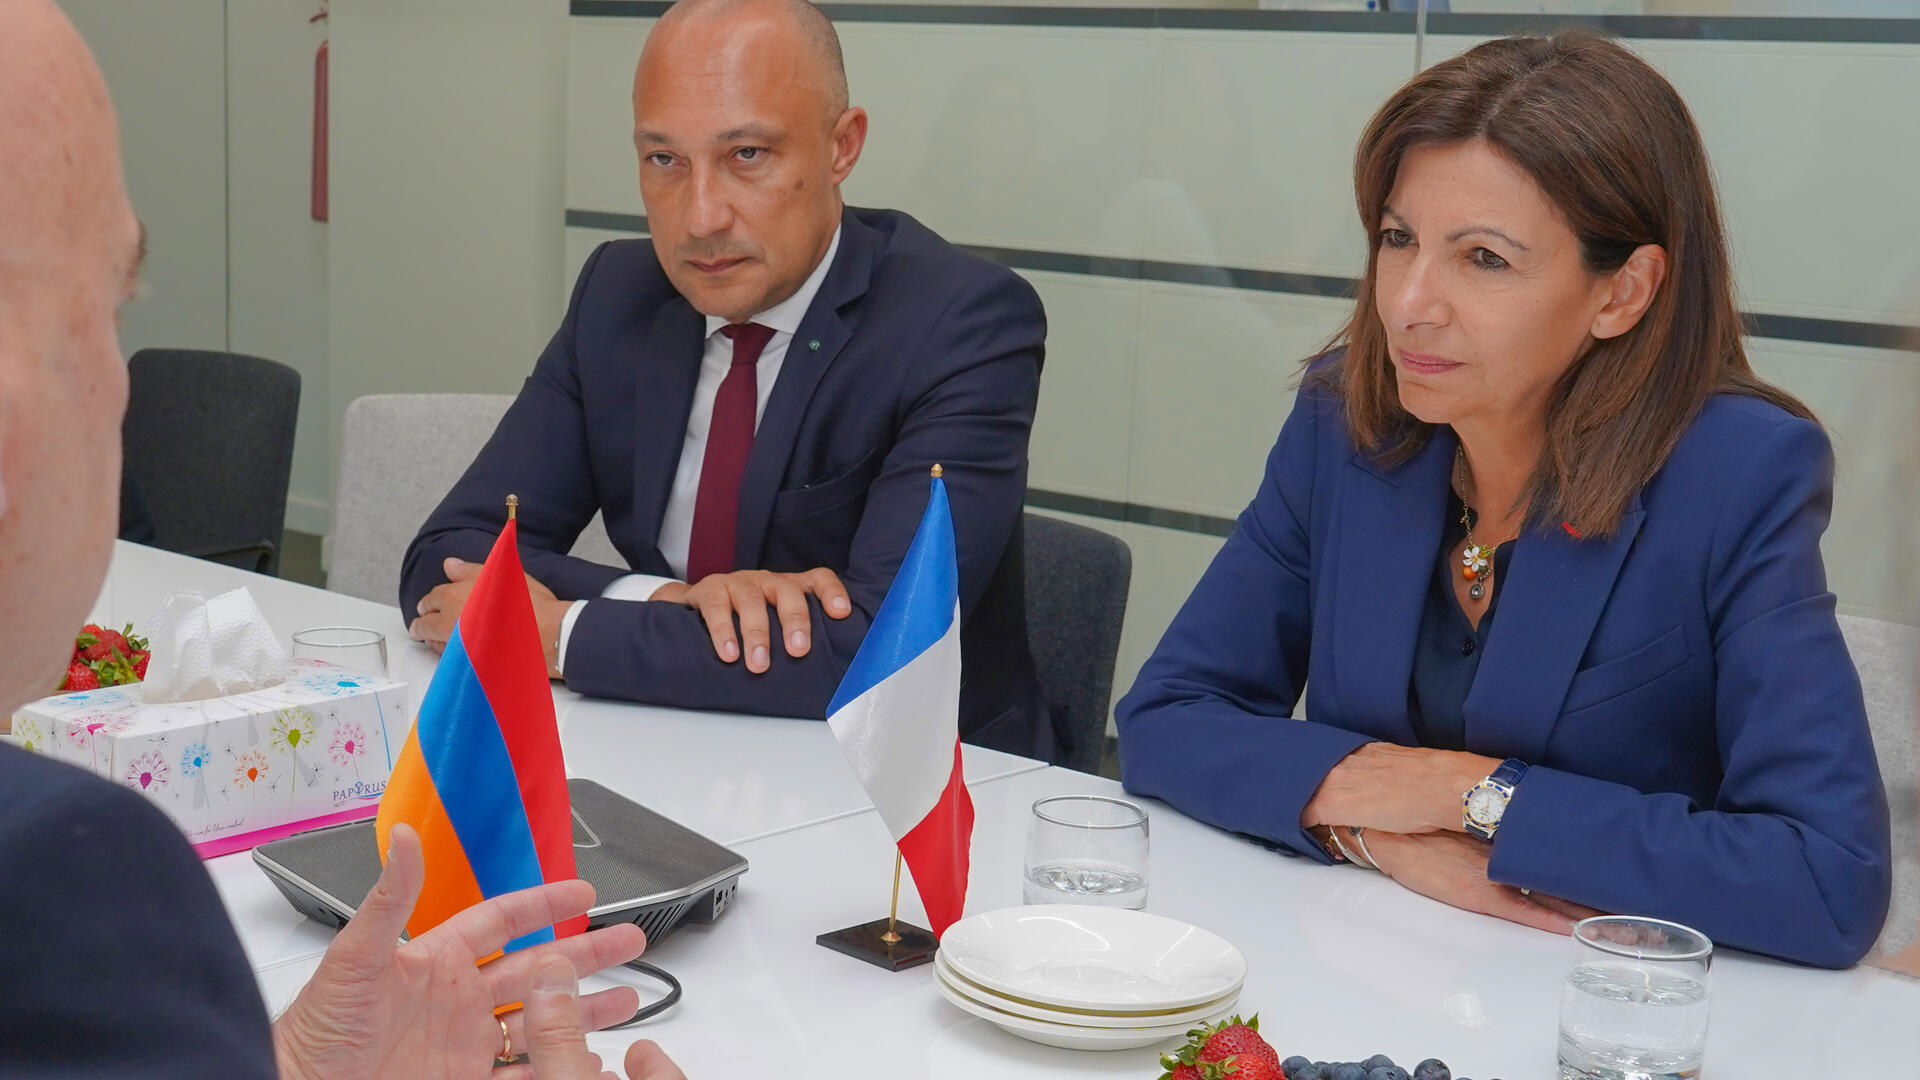 Mayor of Paris Visits AGBU Armenia Reaffirming a Fruitful Relationship